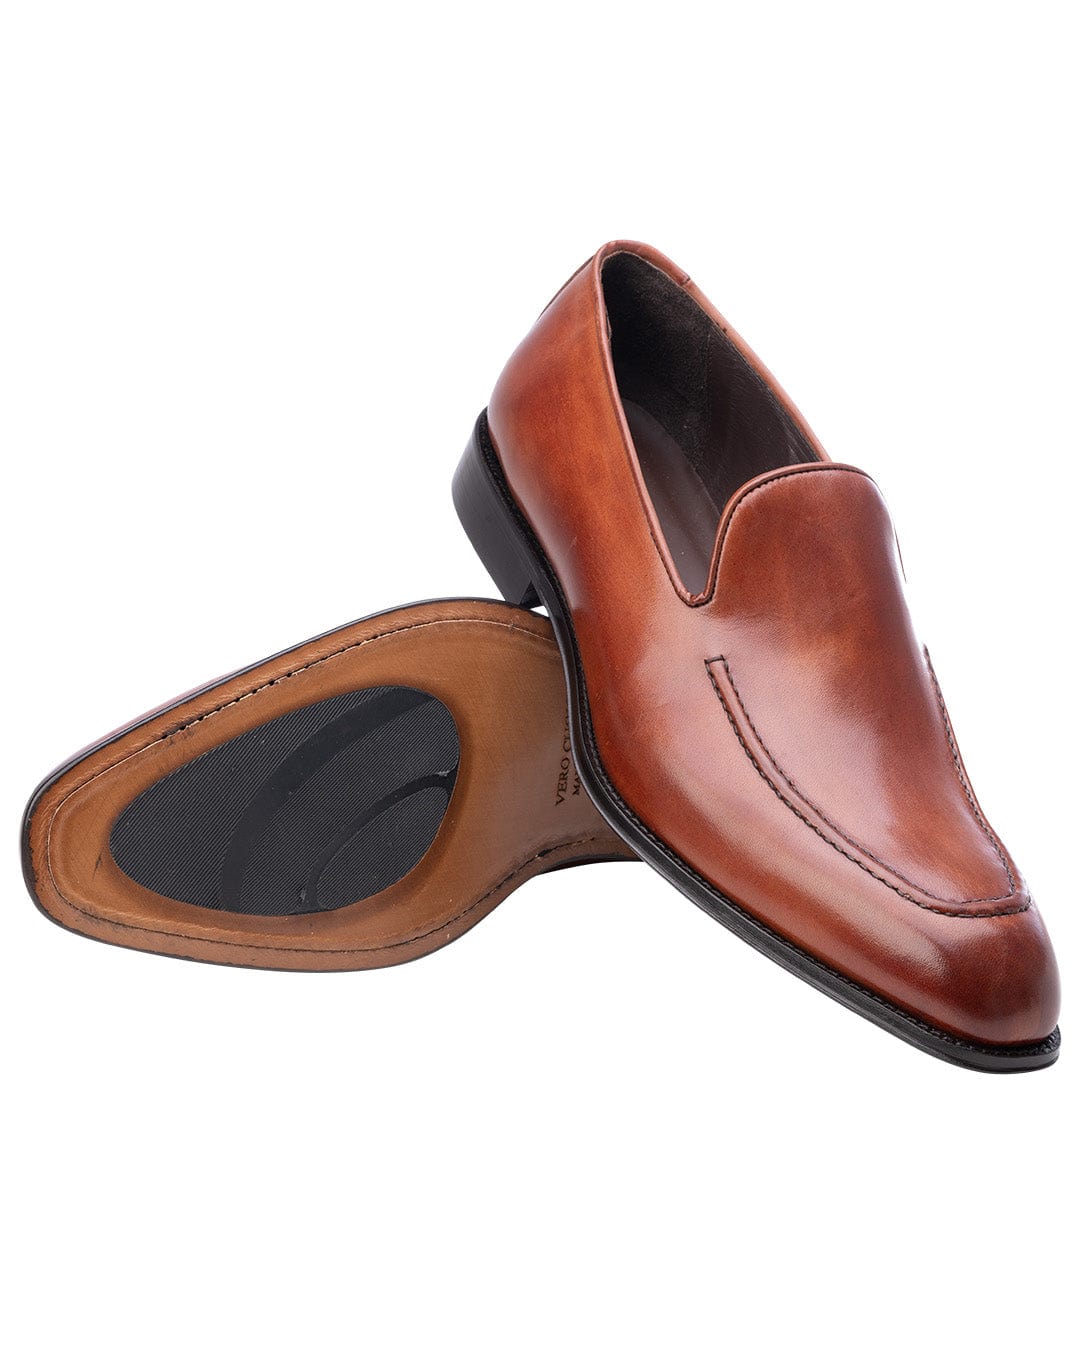 Gagliardi Shoes Gagliardi Tan Made in Italy Apron Front Loafers